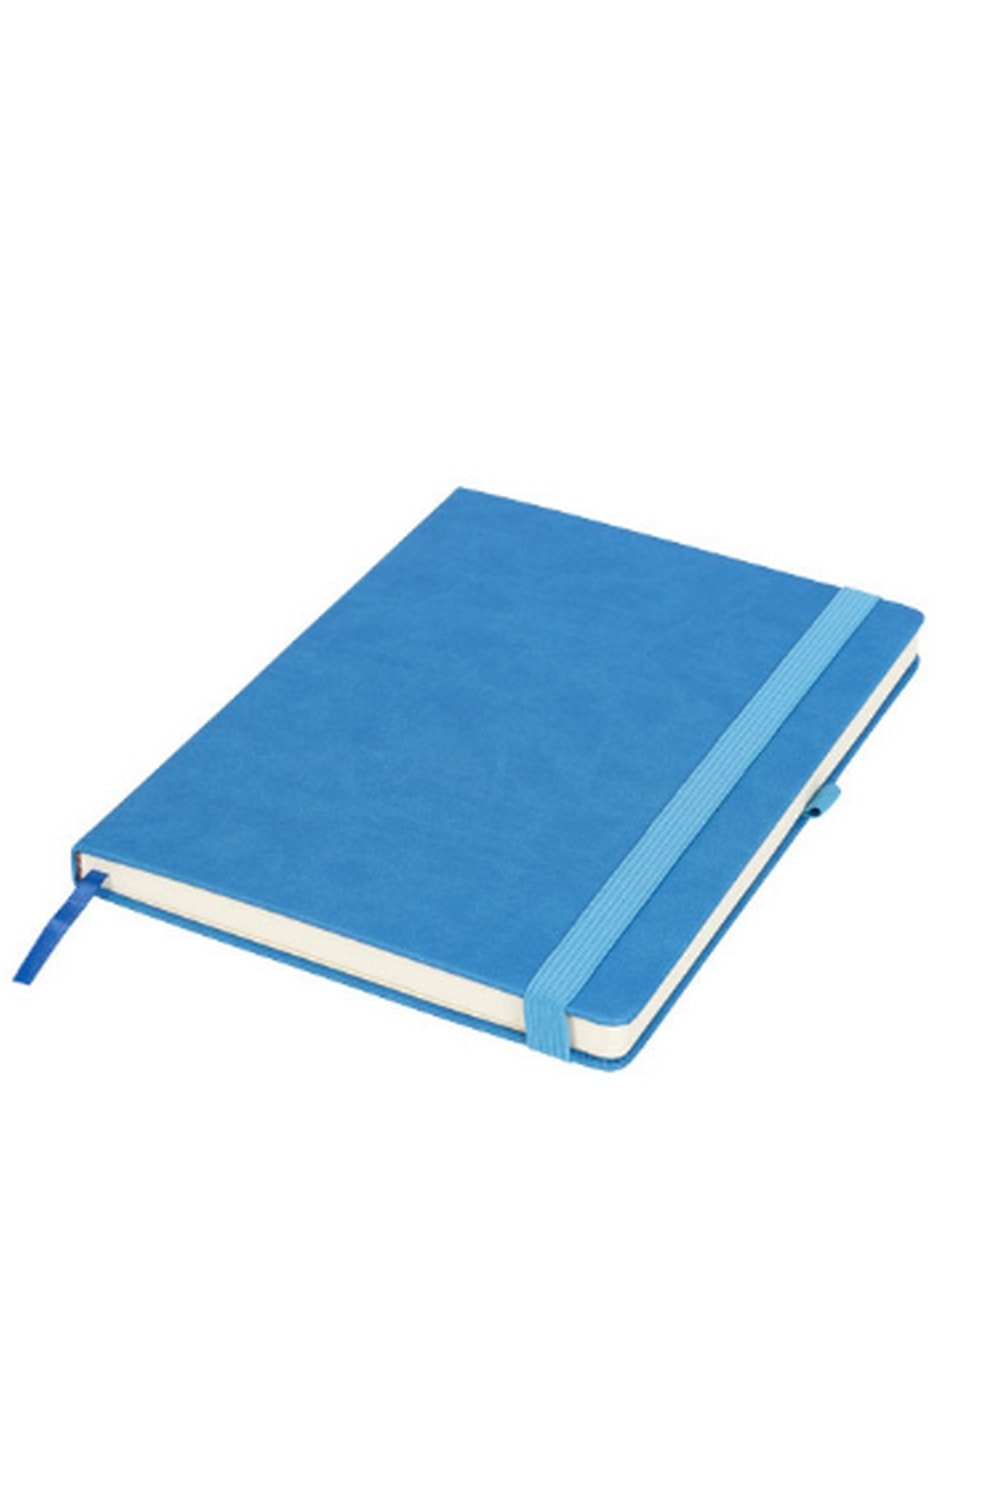 Rivista notebook large (Blue) (Large)